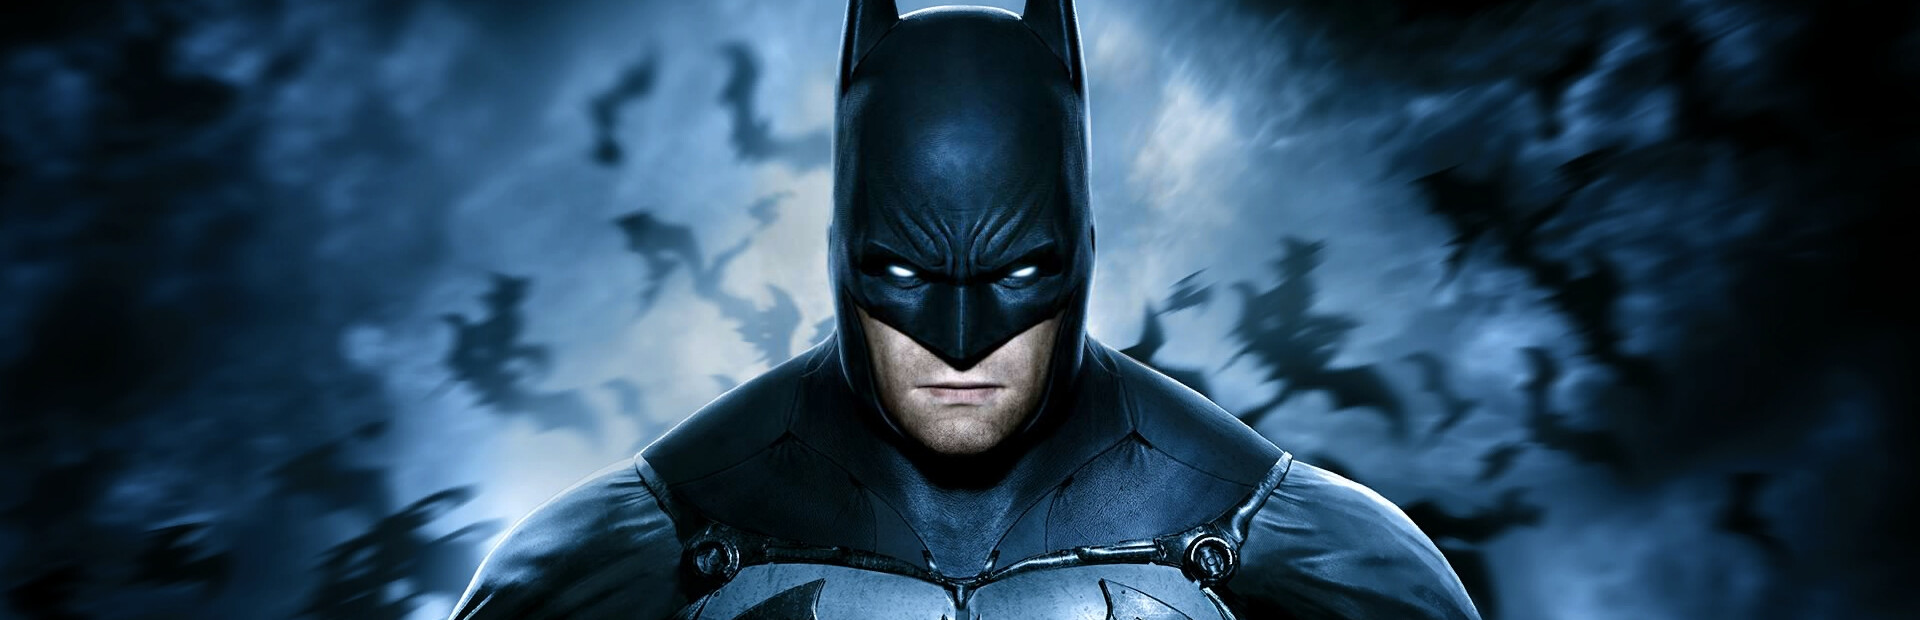 Batman™: Arkham VR cover image